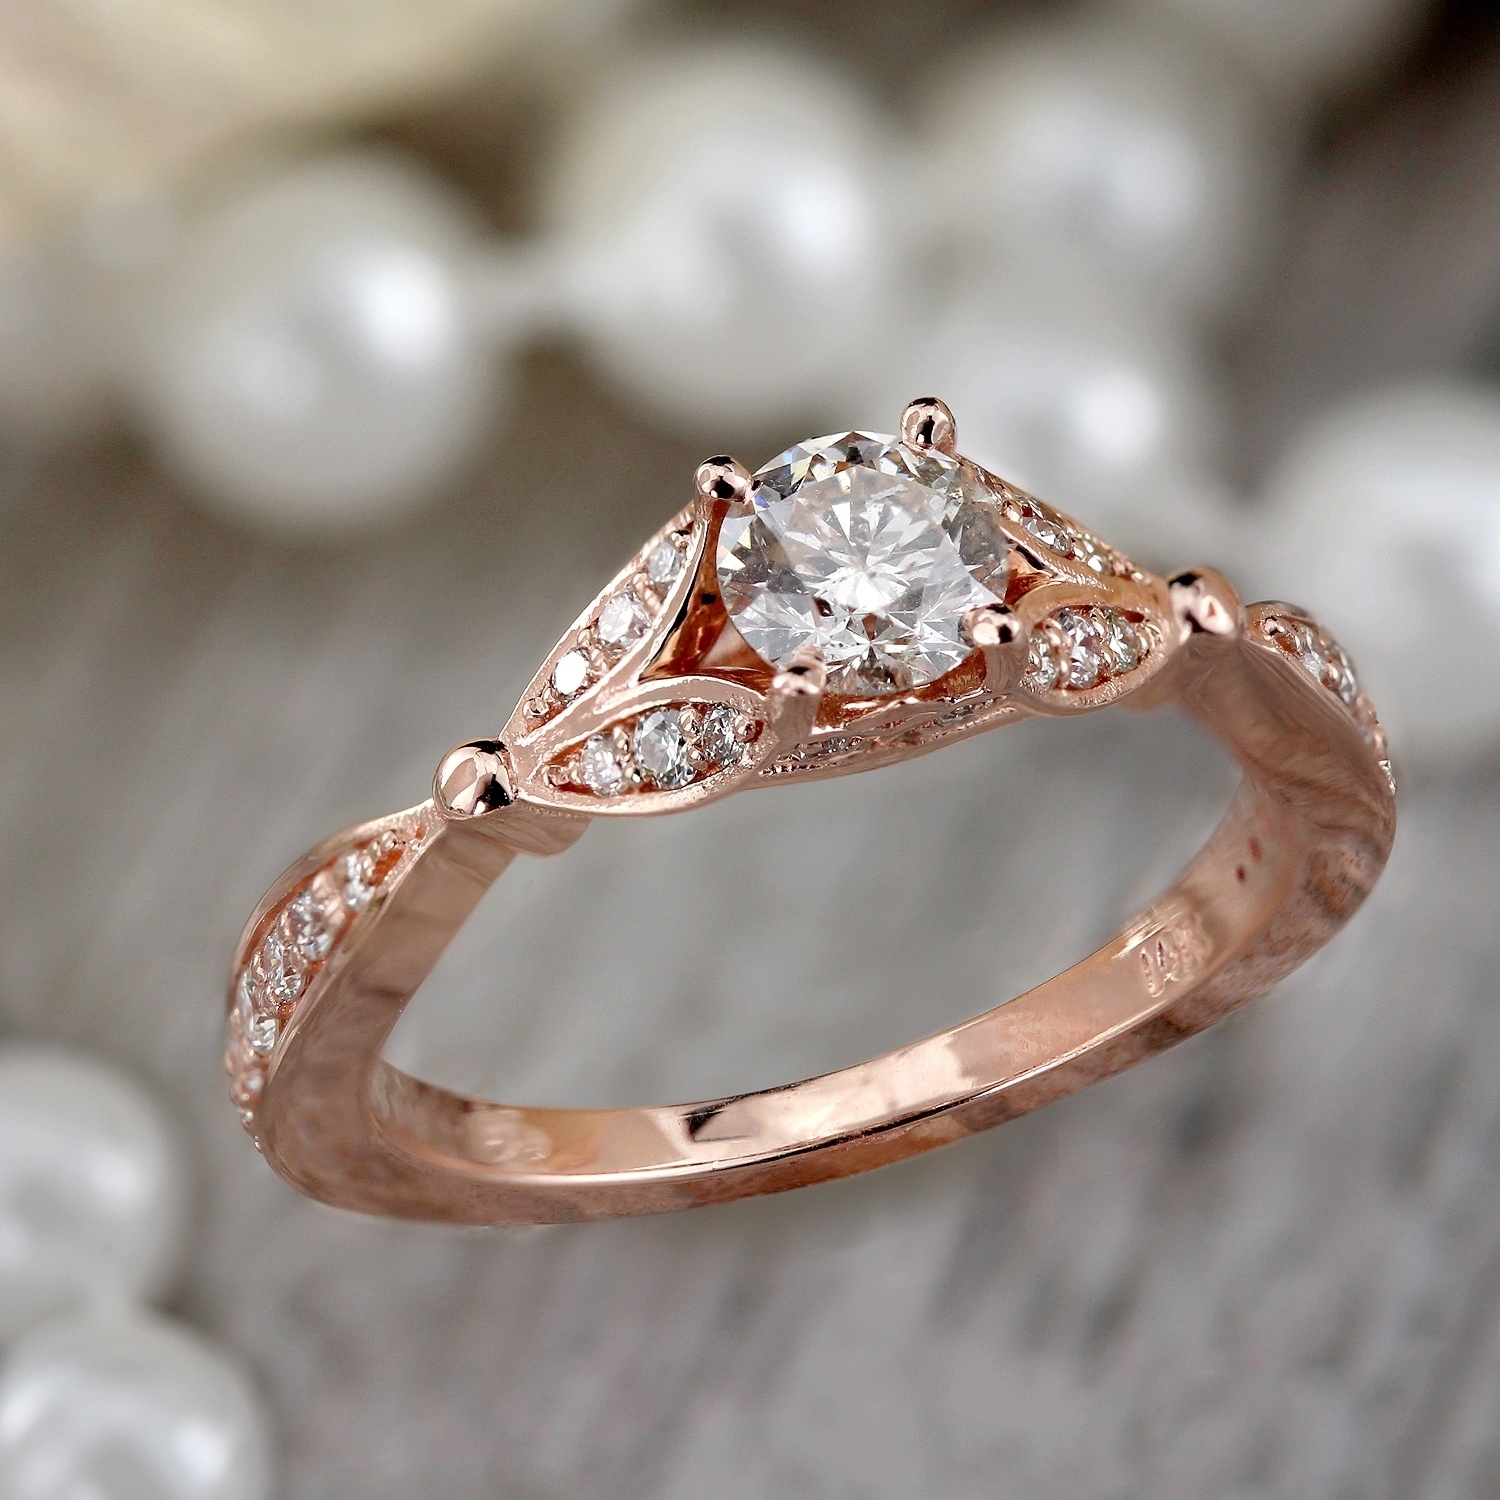 Auriya 14k Gold 3 4ct TDW Vintage Nature Inspired Diamond Engagement Ring 563b3c11 203a 4b7a a46d a56b6fe888b0